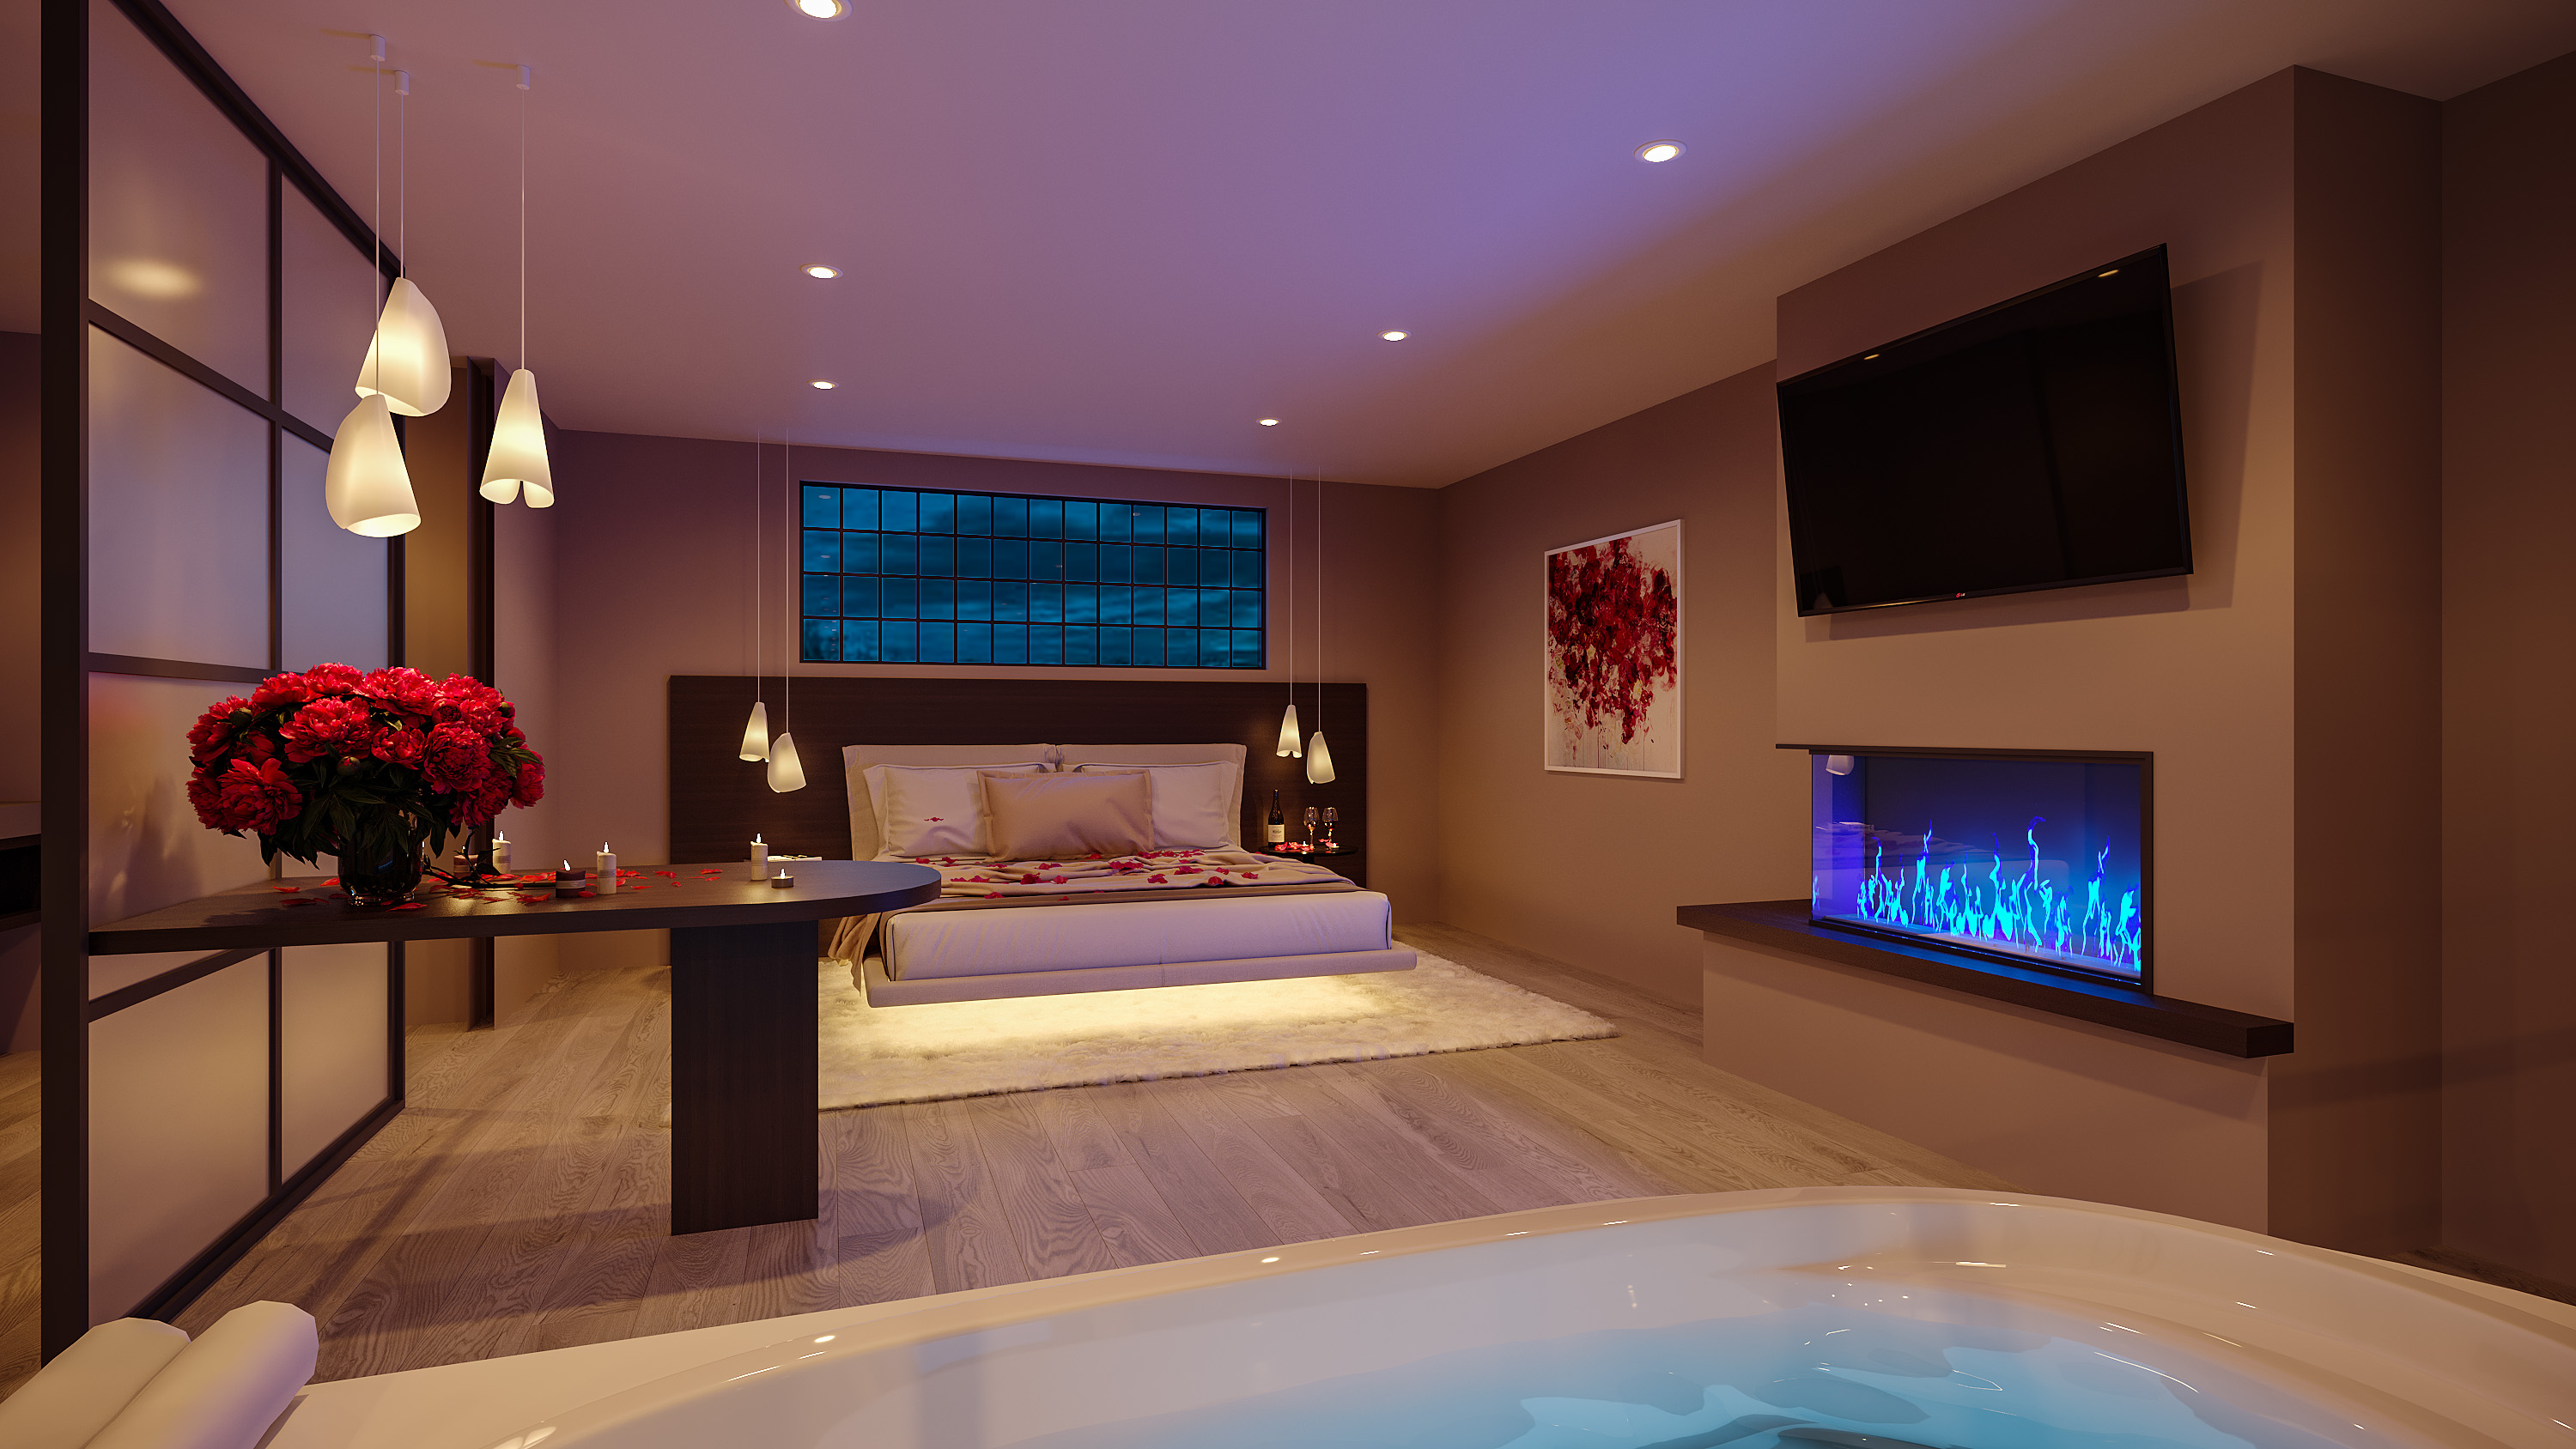 Cabana suites interiors bedroom Applet3D